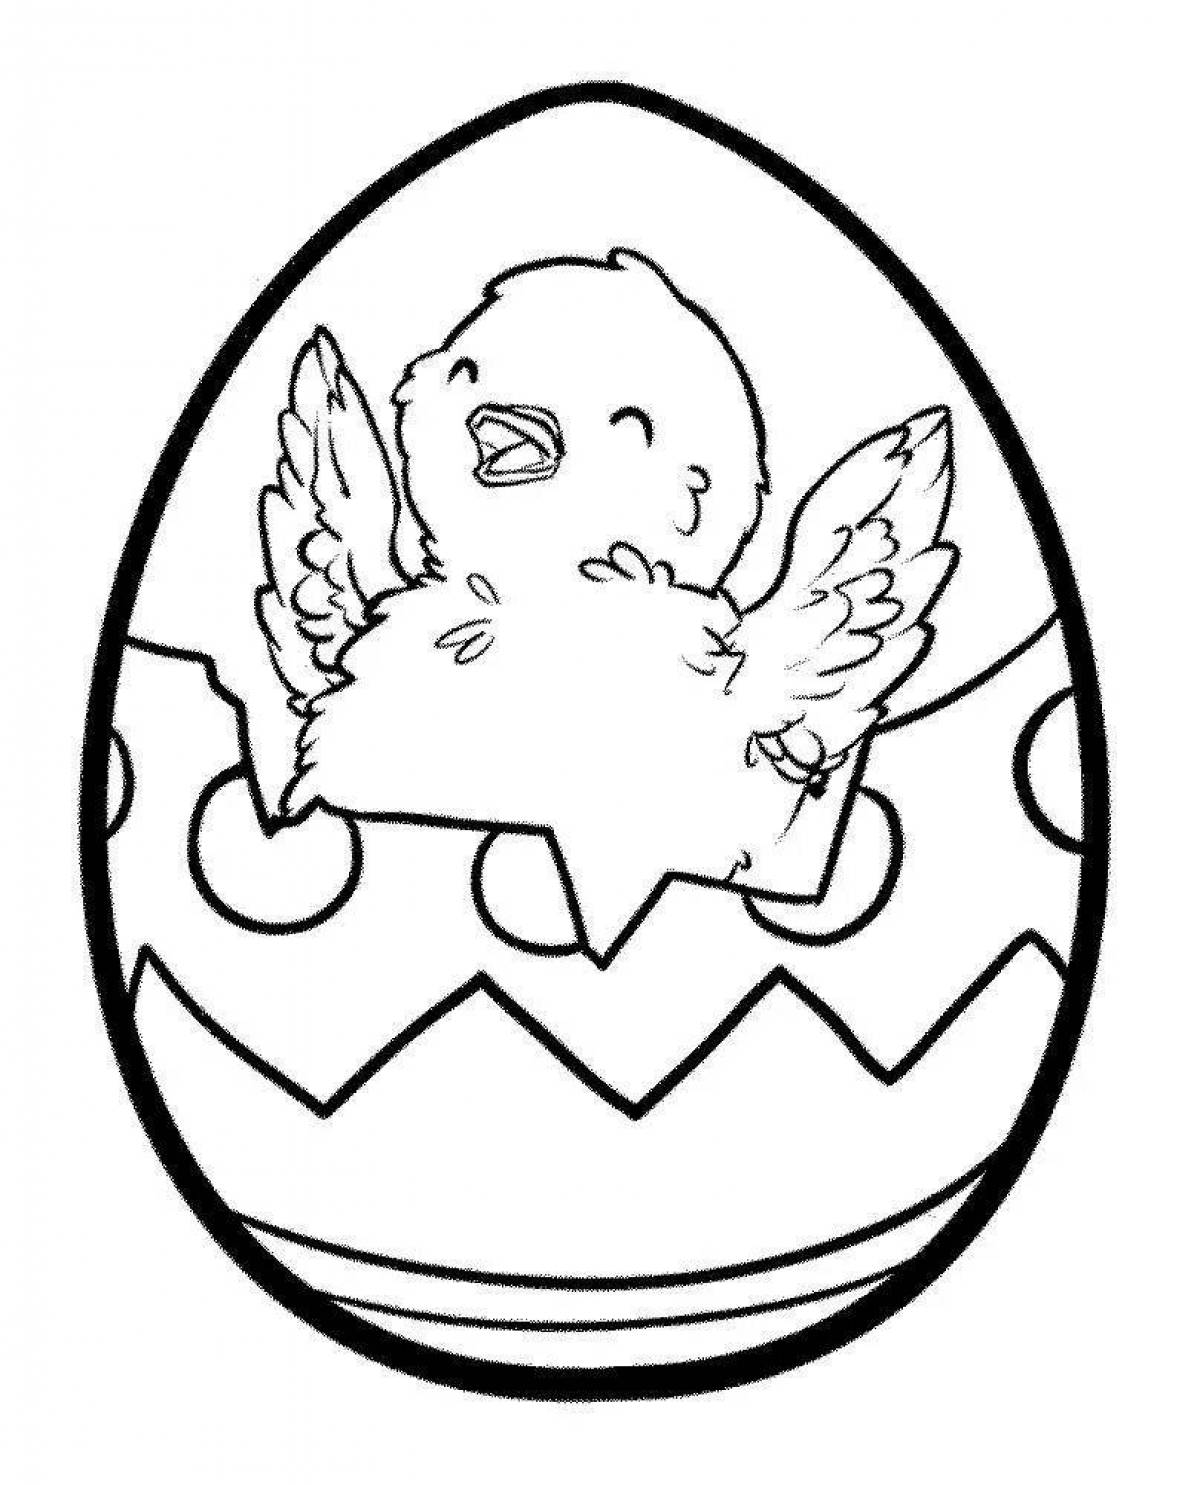 Распечатать раскраску яйца. Пасхальное яйцо раскраска. Раскраски пасочных яиц. Яйца на Пасху раскраска. Пасхальное яичко раскраска.